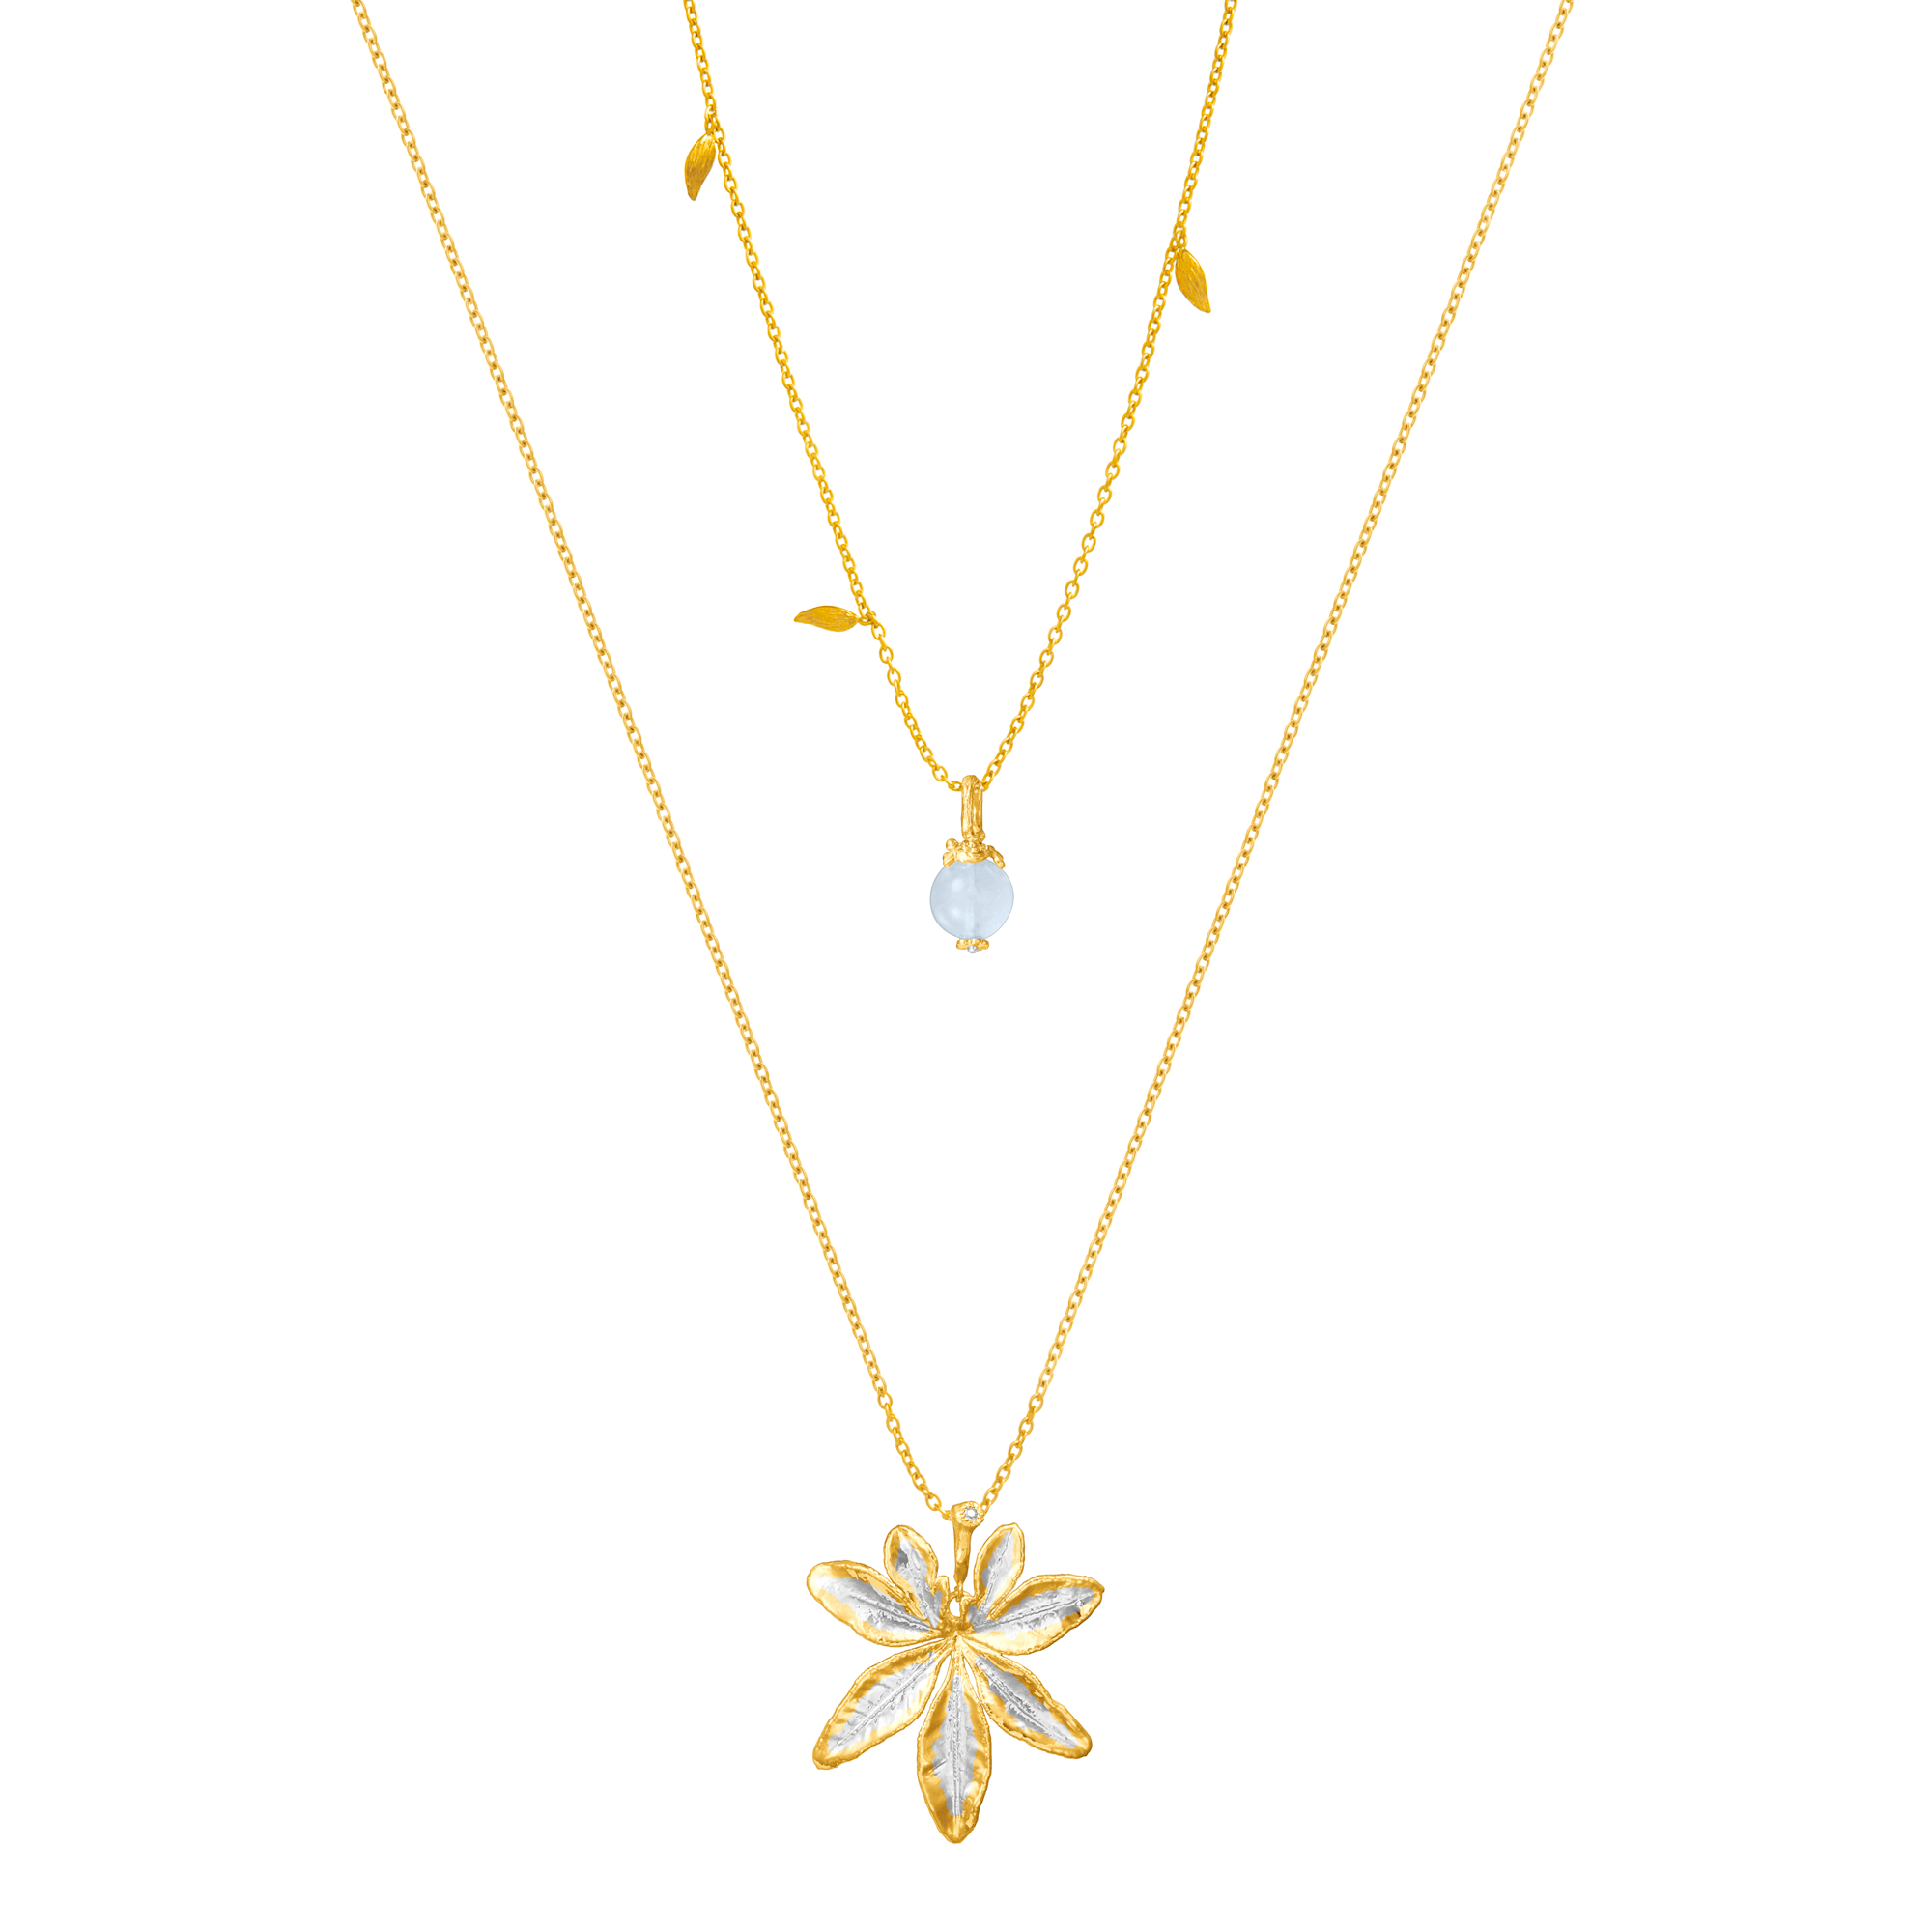 Morning Glory Leaf Necklace with Aquamarine and Topaz